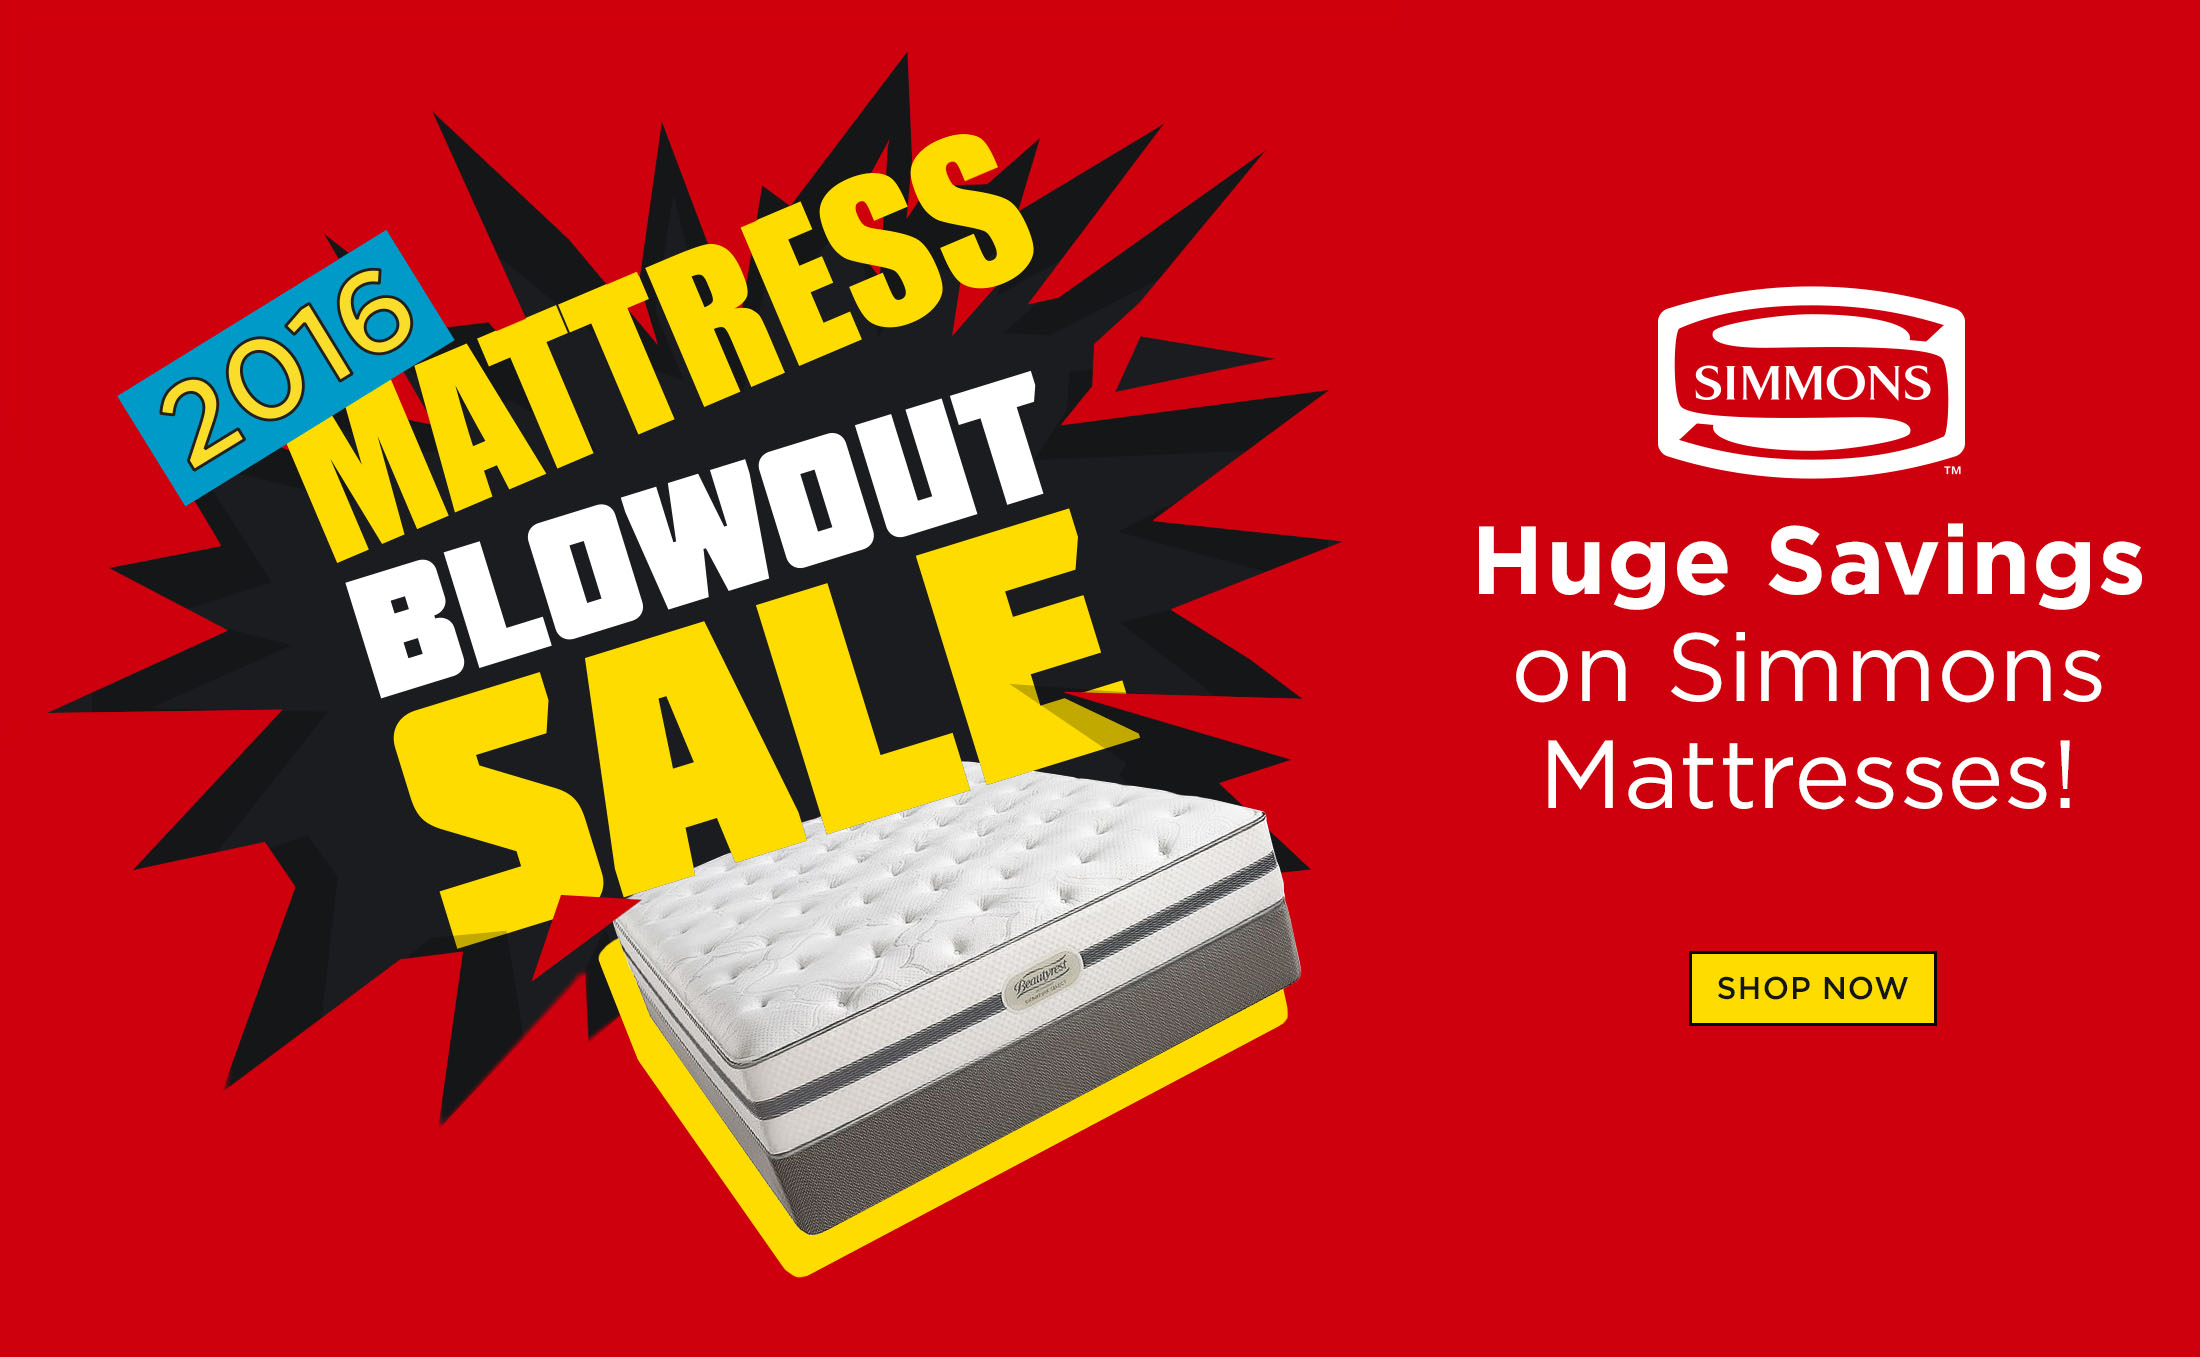 907100-1058 mattress sale